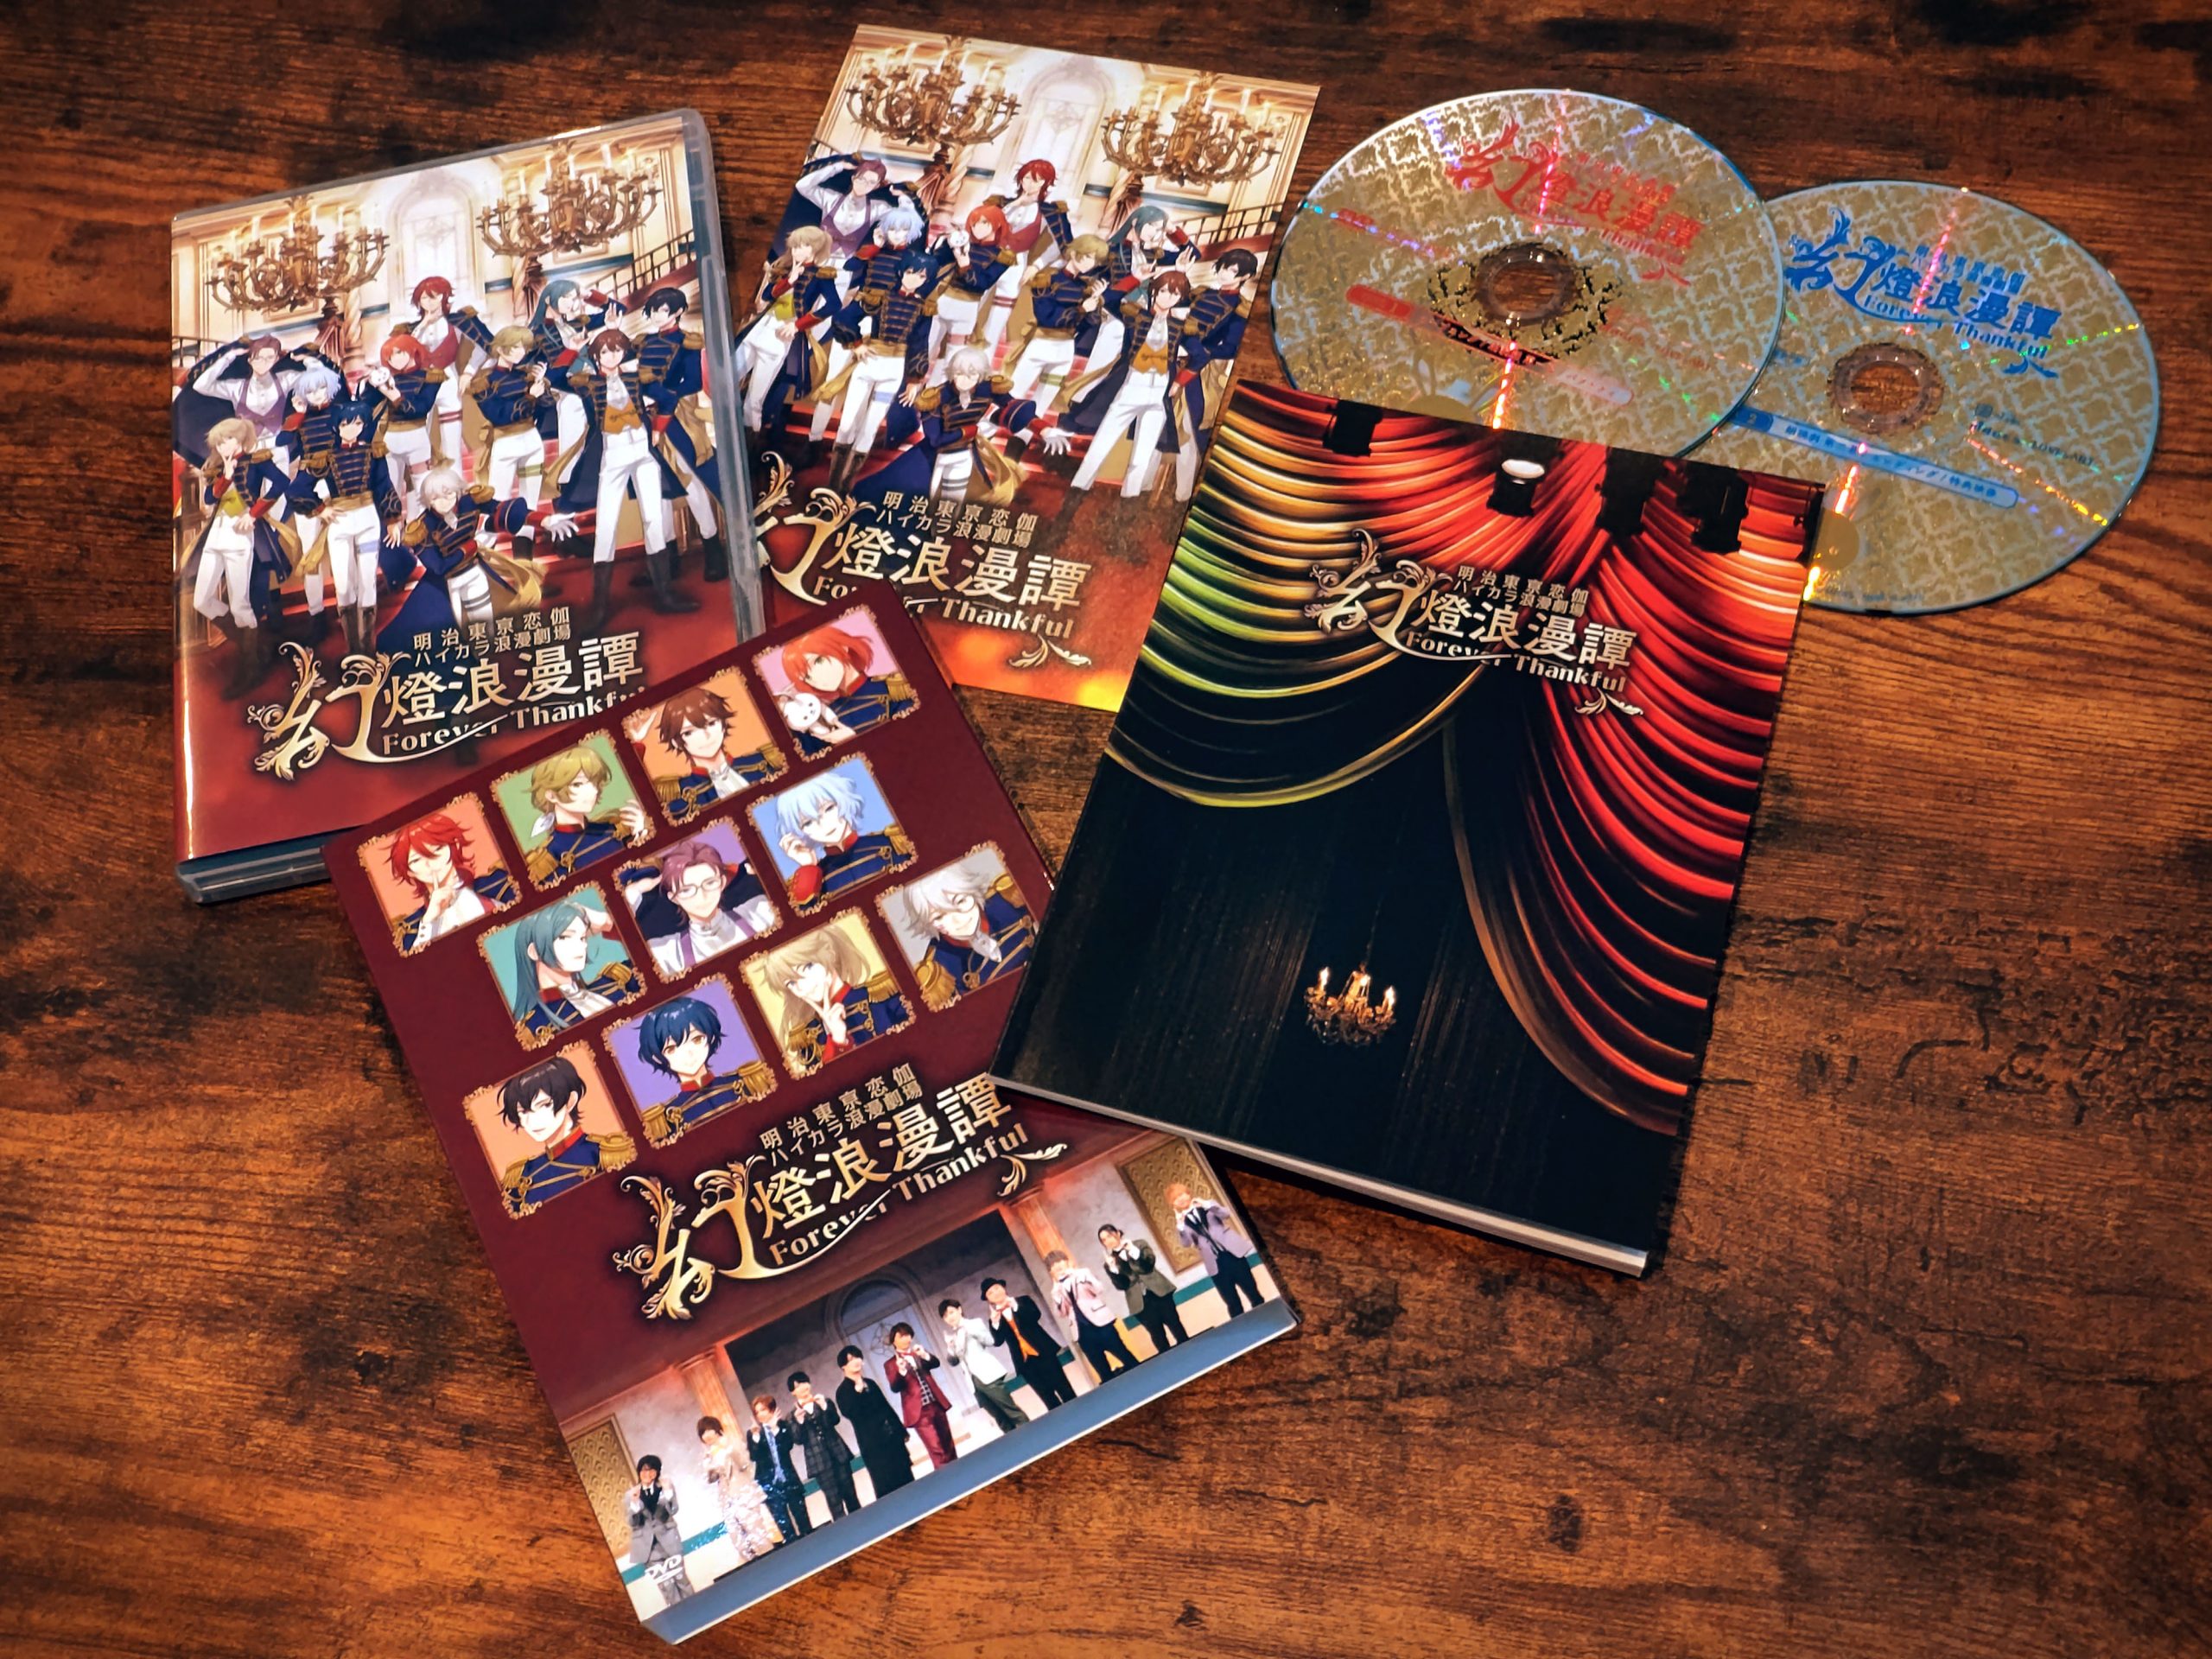 DVD『明治東亰恋伽 ハイカラ浪漫劇場「幻燈浪漫譚～Forever Thankful 